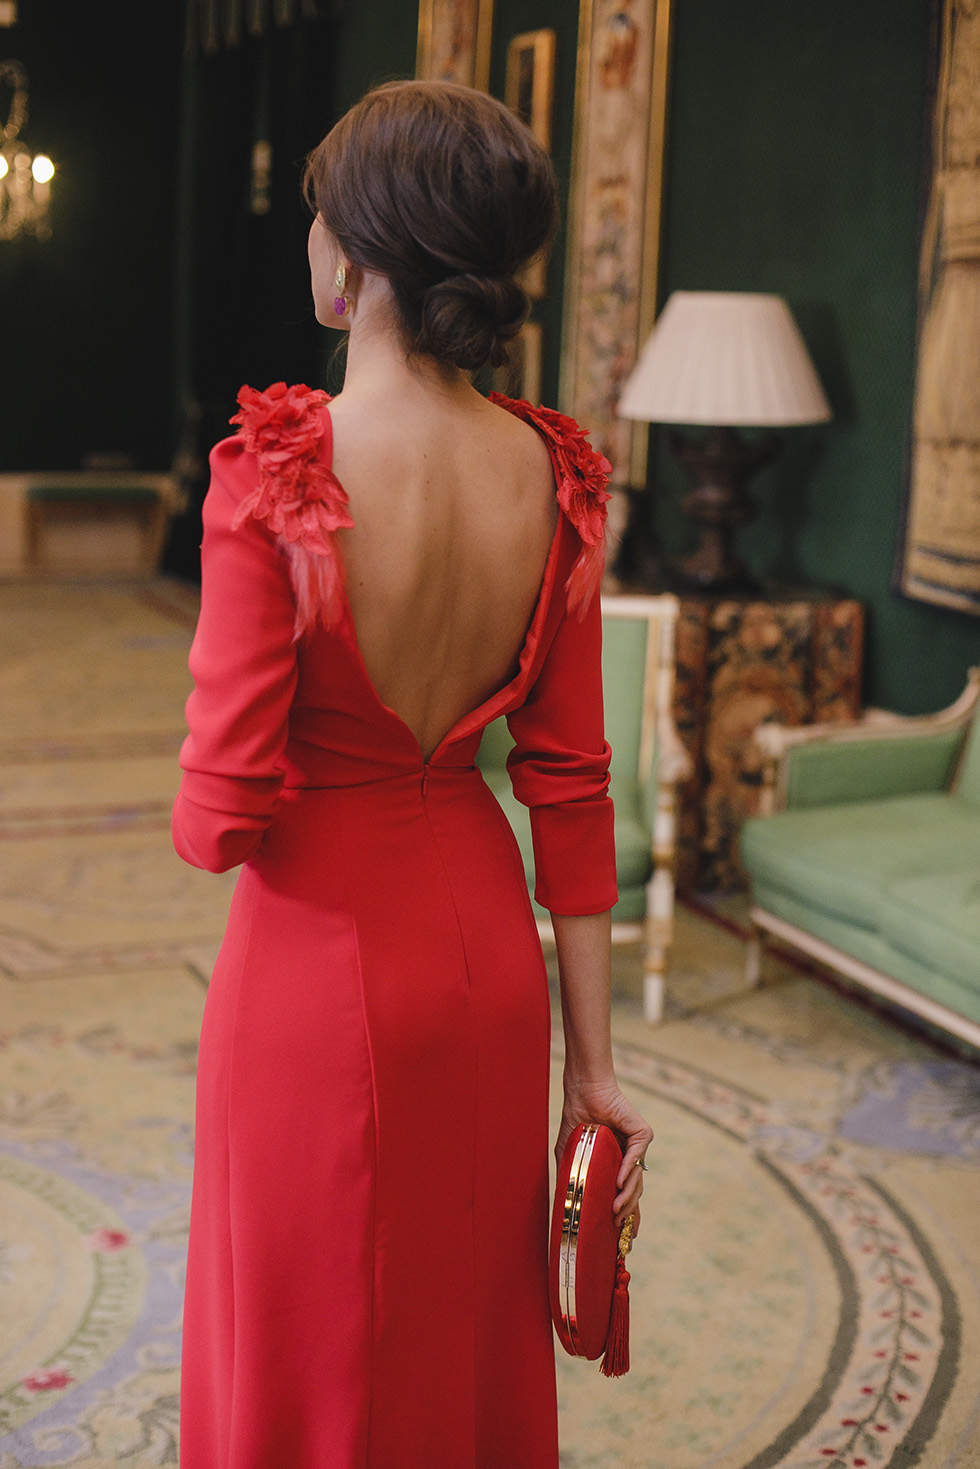 Look invitada de tarde: red dress | Invitada Perfecta